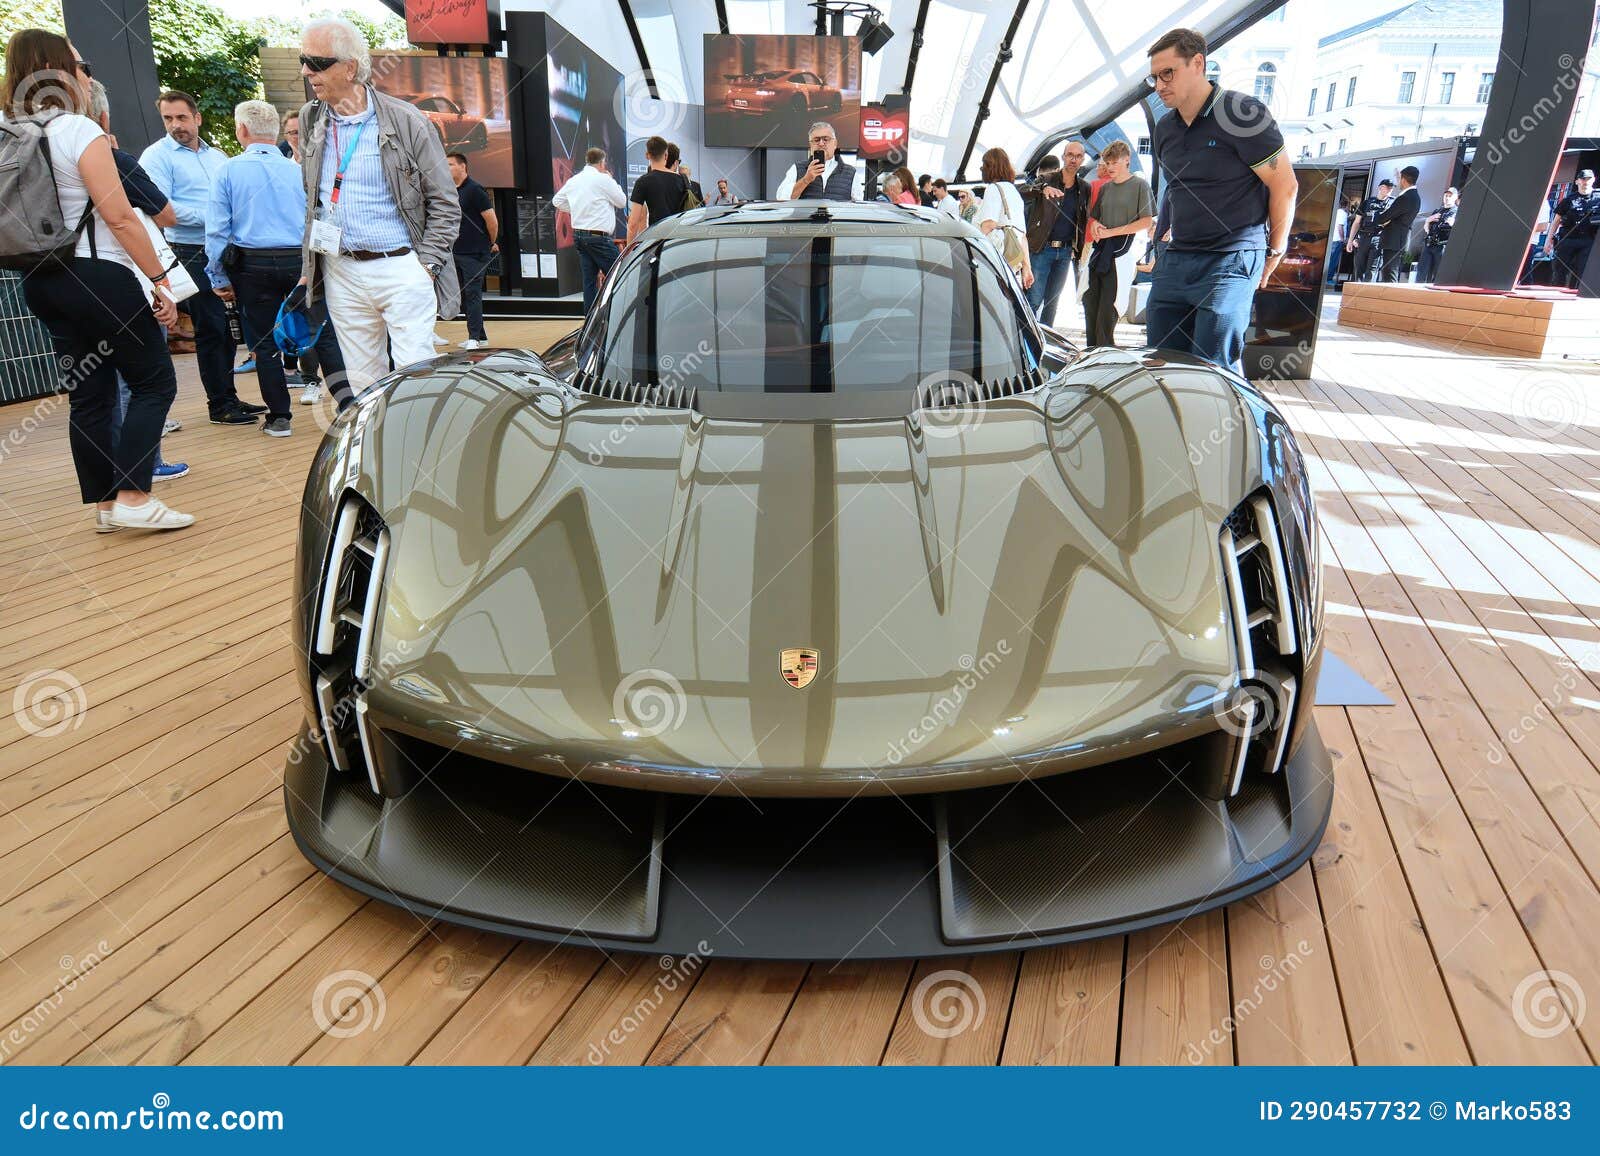 https://thumbs.dreamstime.com/z/porsche-mission-electric-concept-sports-car-manufactured-was-presented-june-set-to-be-successor-spyder-290457732.jpg